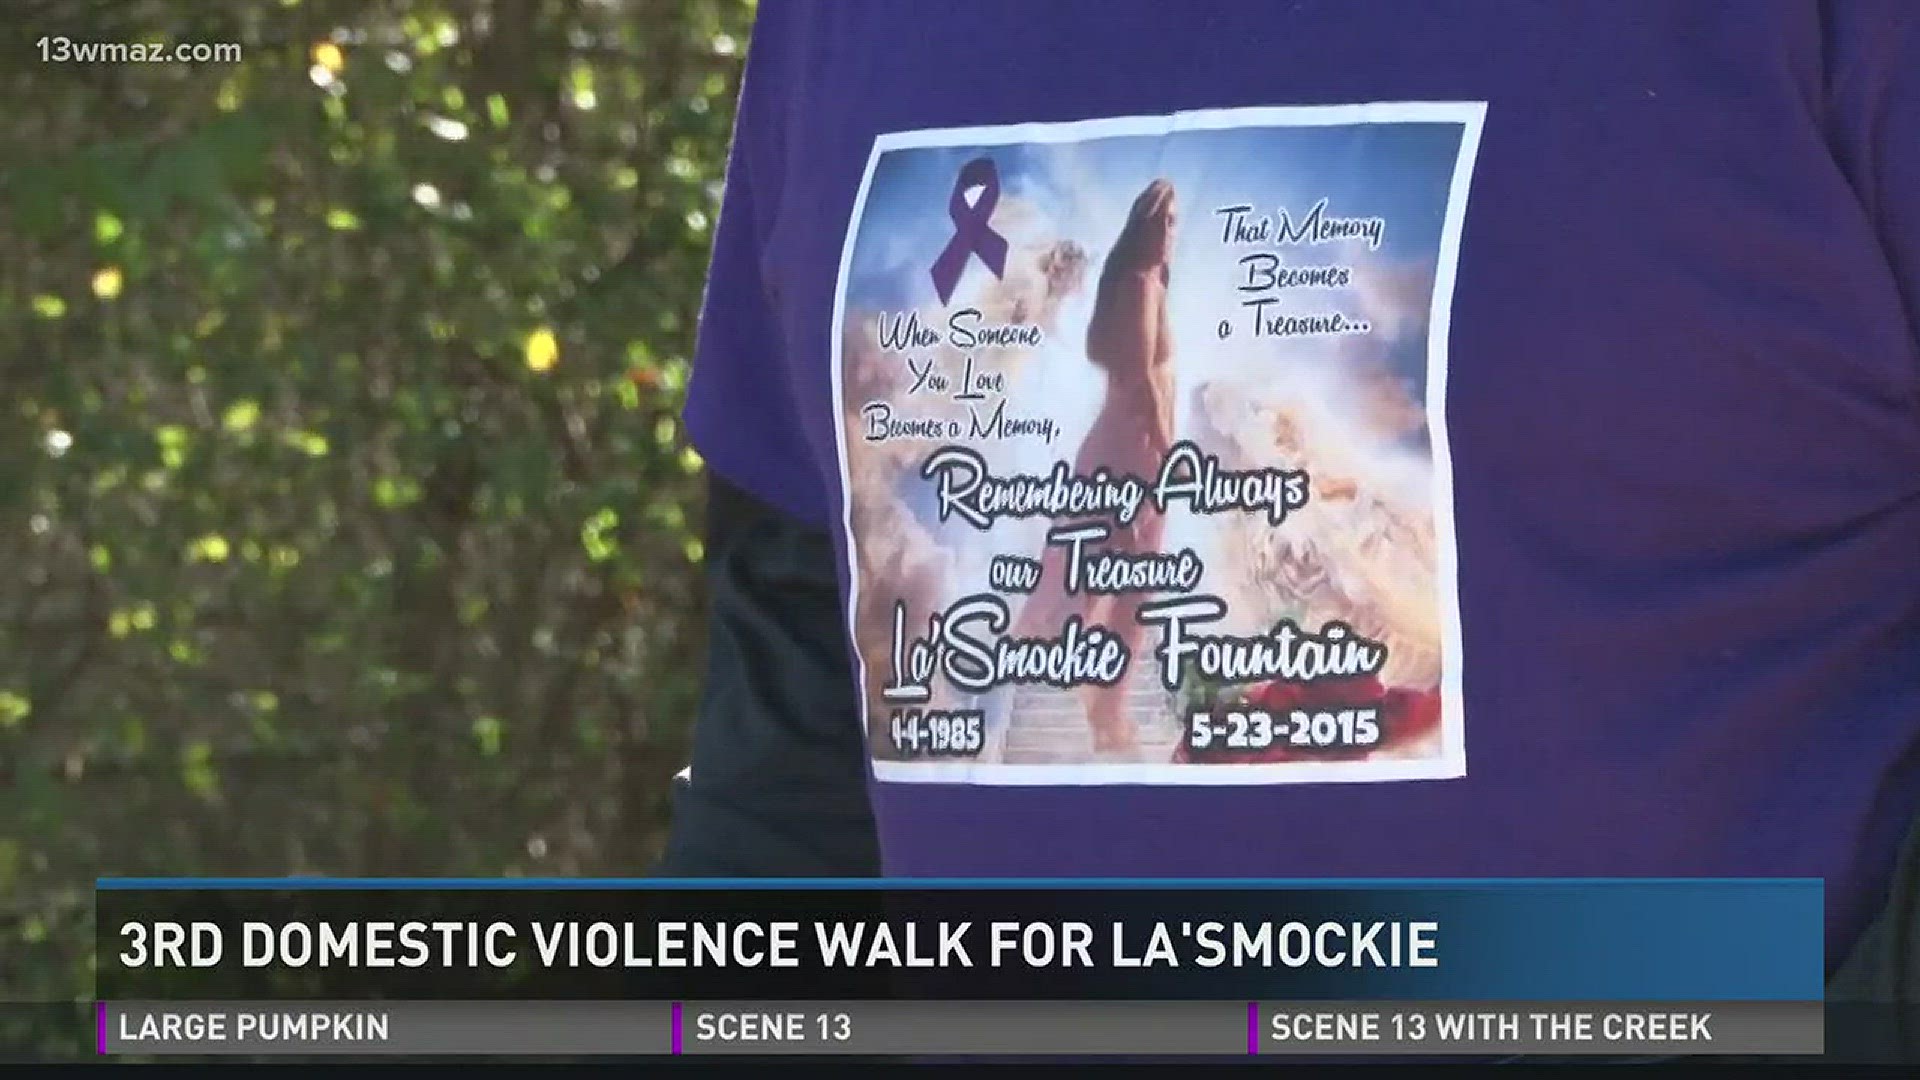 Third domestic violence walk for La'Smockie